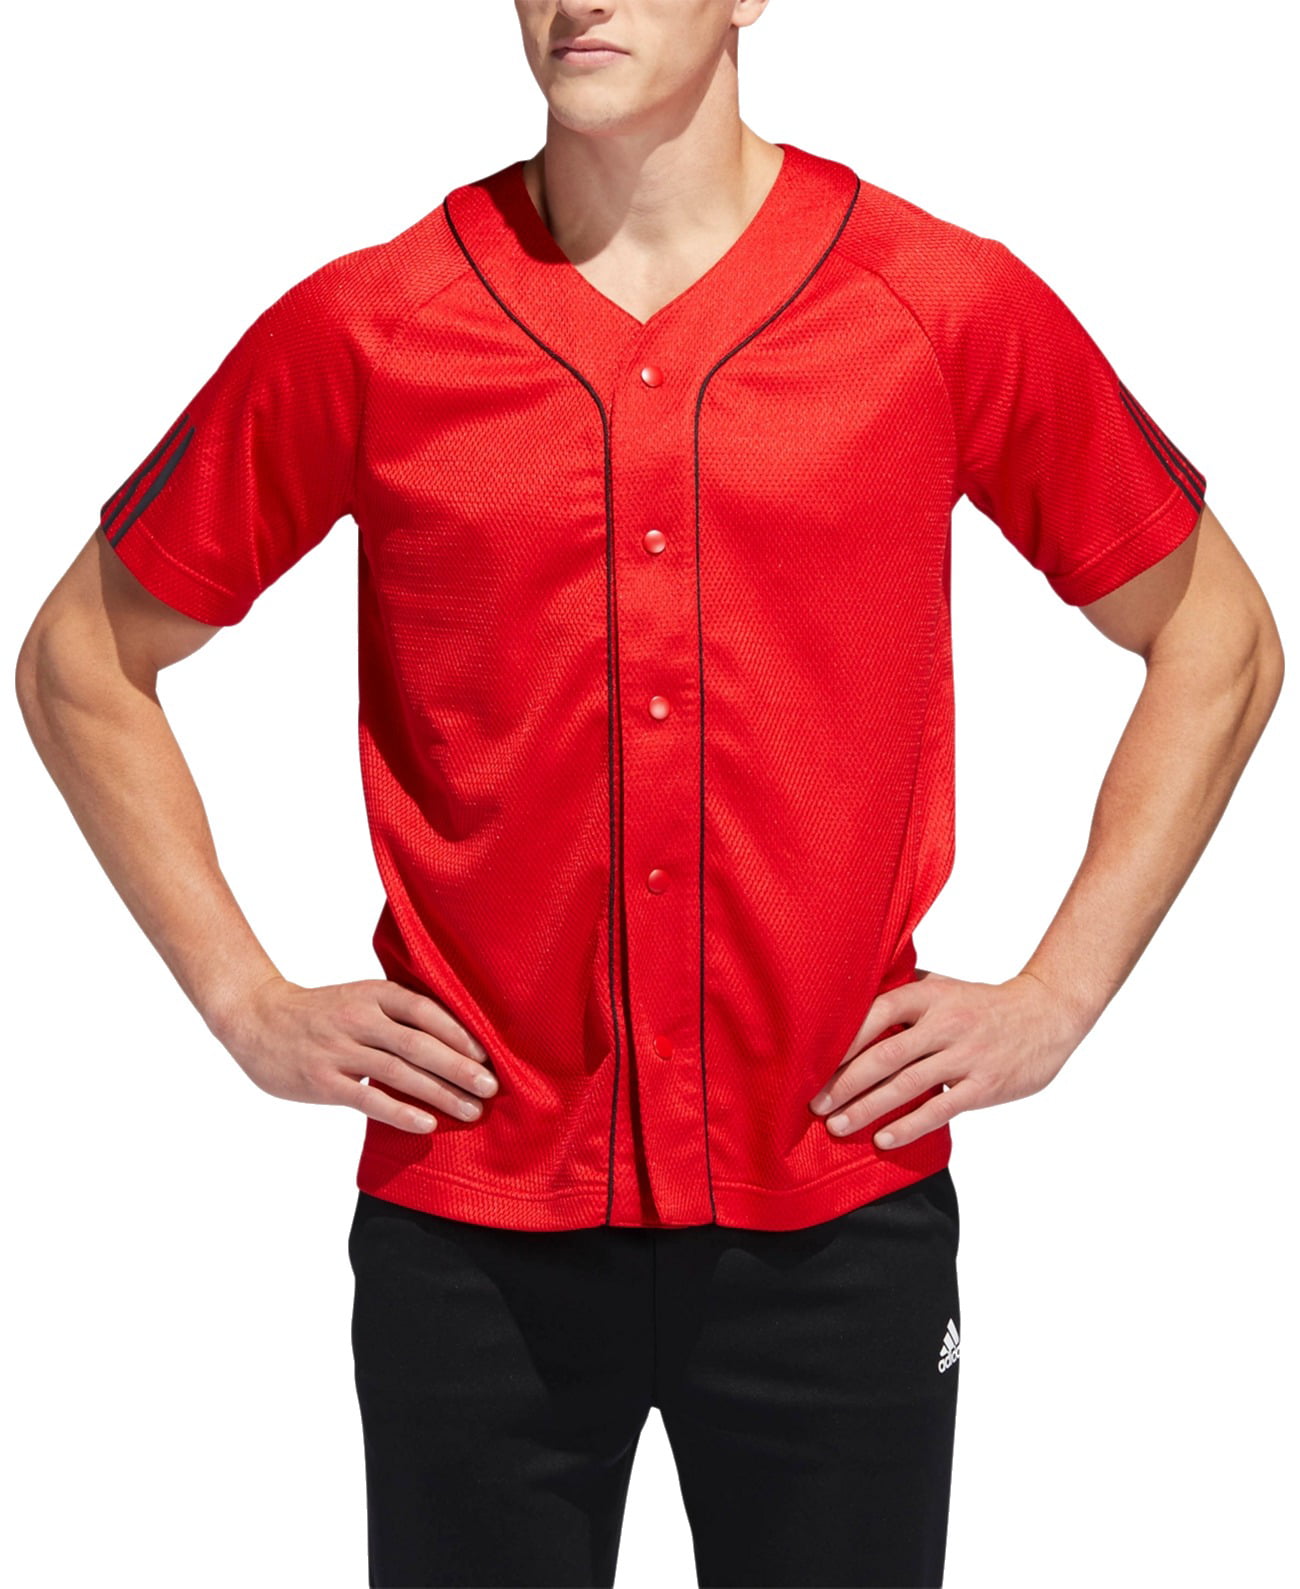 Adidas Casual Shirts - Mens Shirt Black Button Down Baseball Jersey